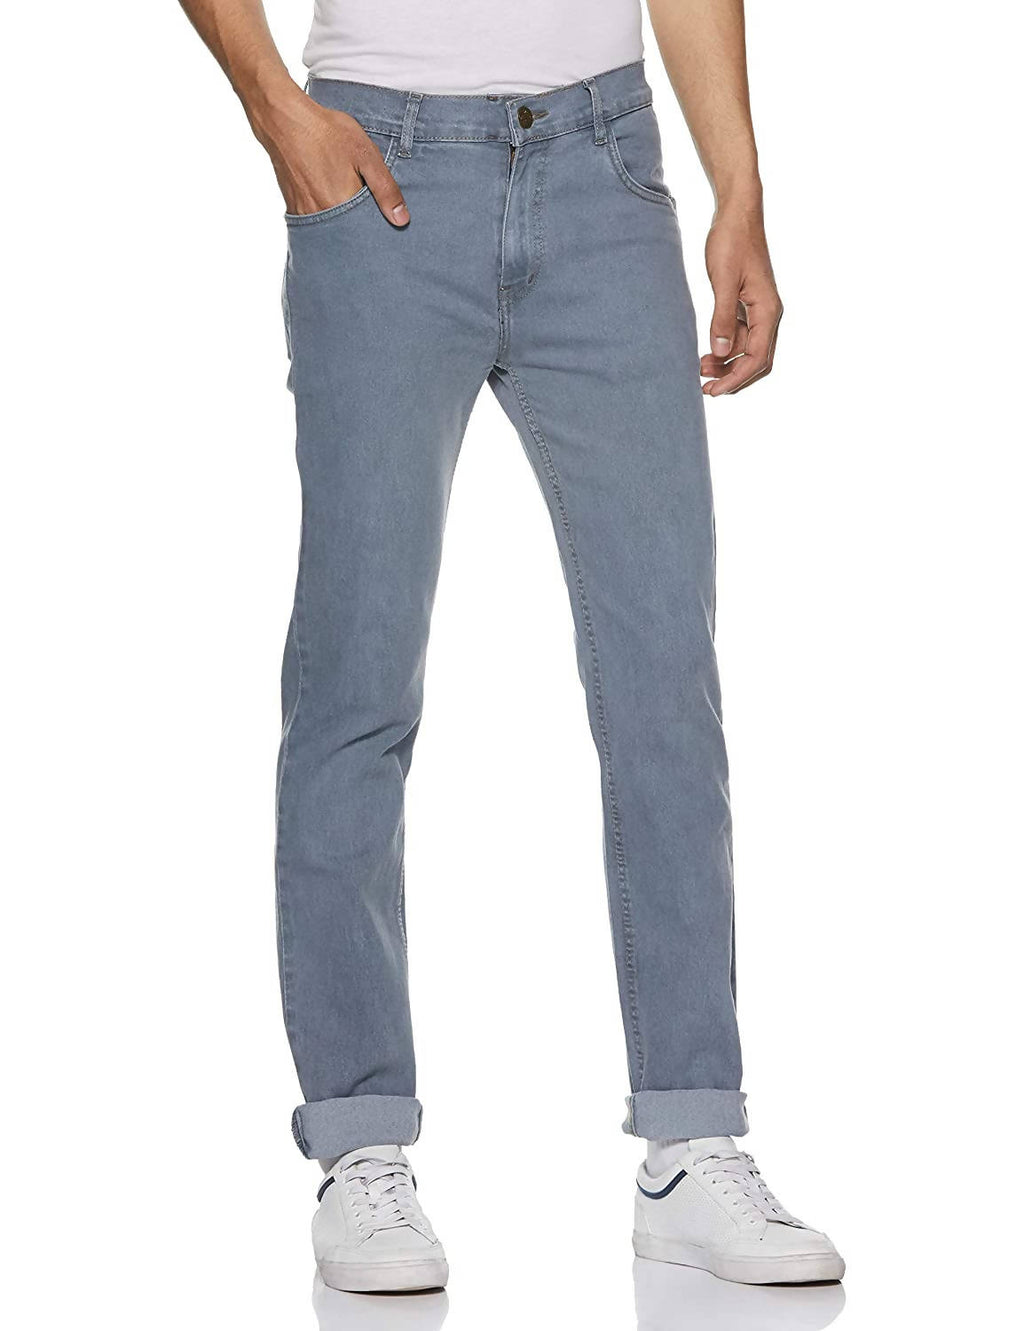 Neostreak Men's Slim Fit Stretchable Jeans